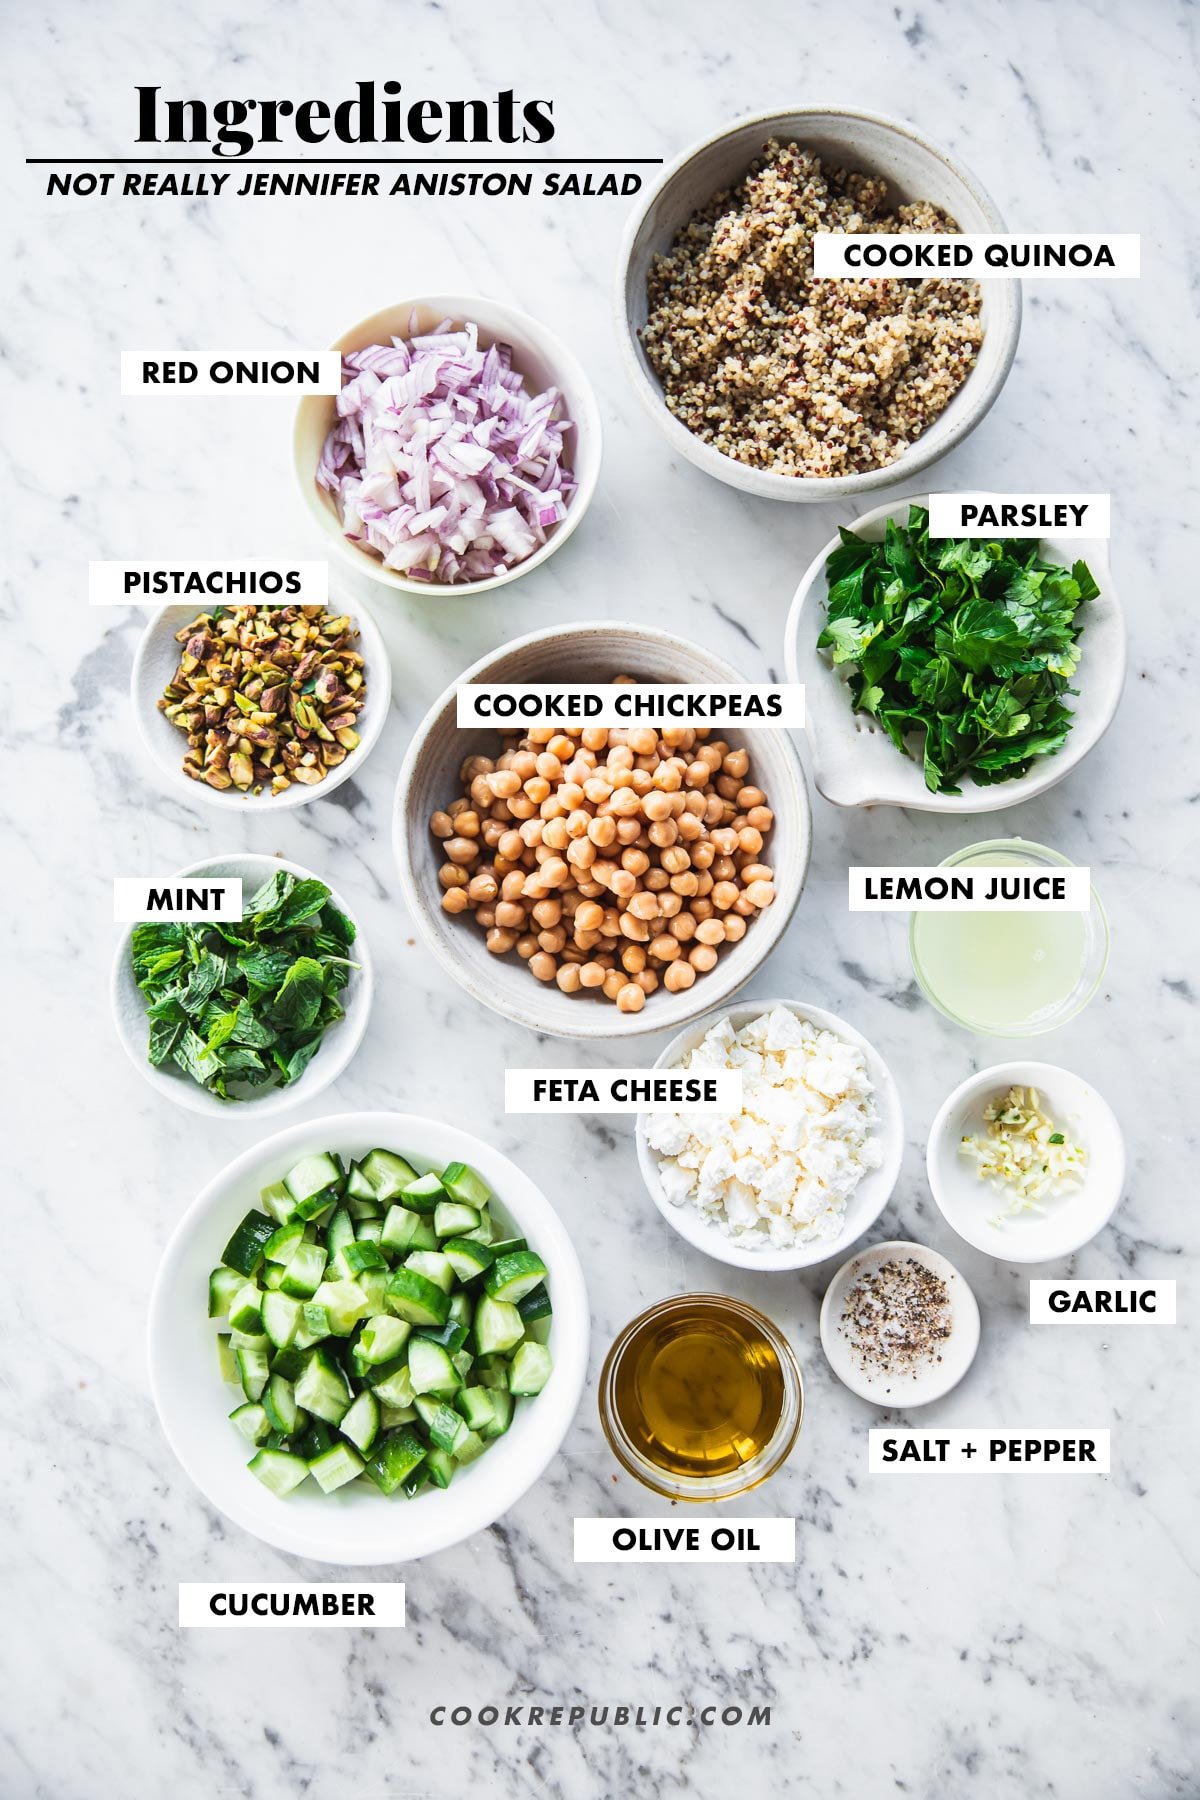 Jennifer Aniston Salad ingredients measured in bowls quinoa, chickpeas, onion, cucumber, pistachios, feta cheese, parsley, mint, lemon juice, garlic, olive oil, salt and pepper.